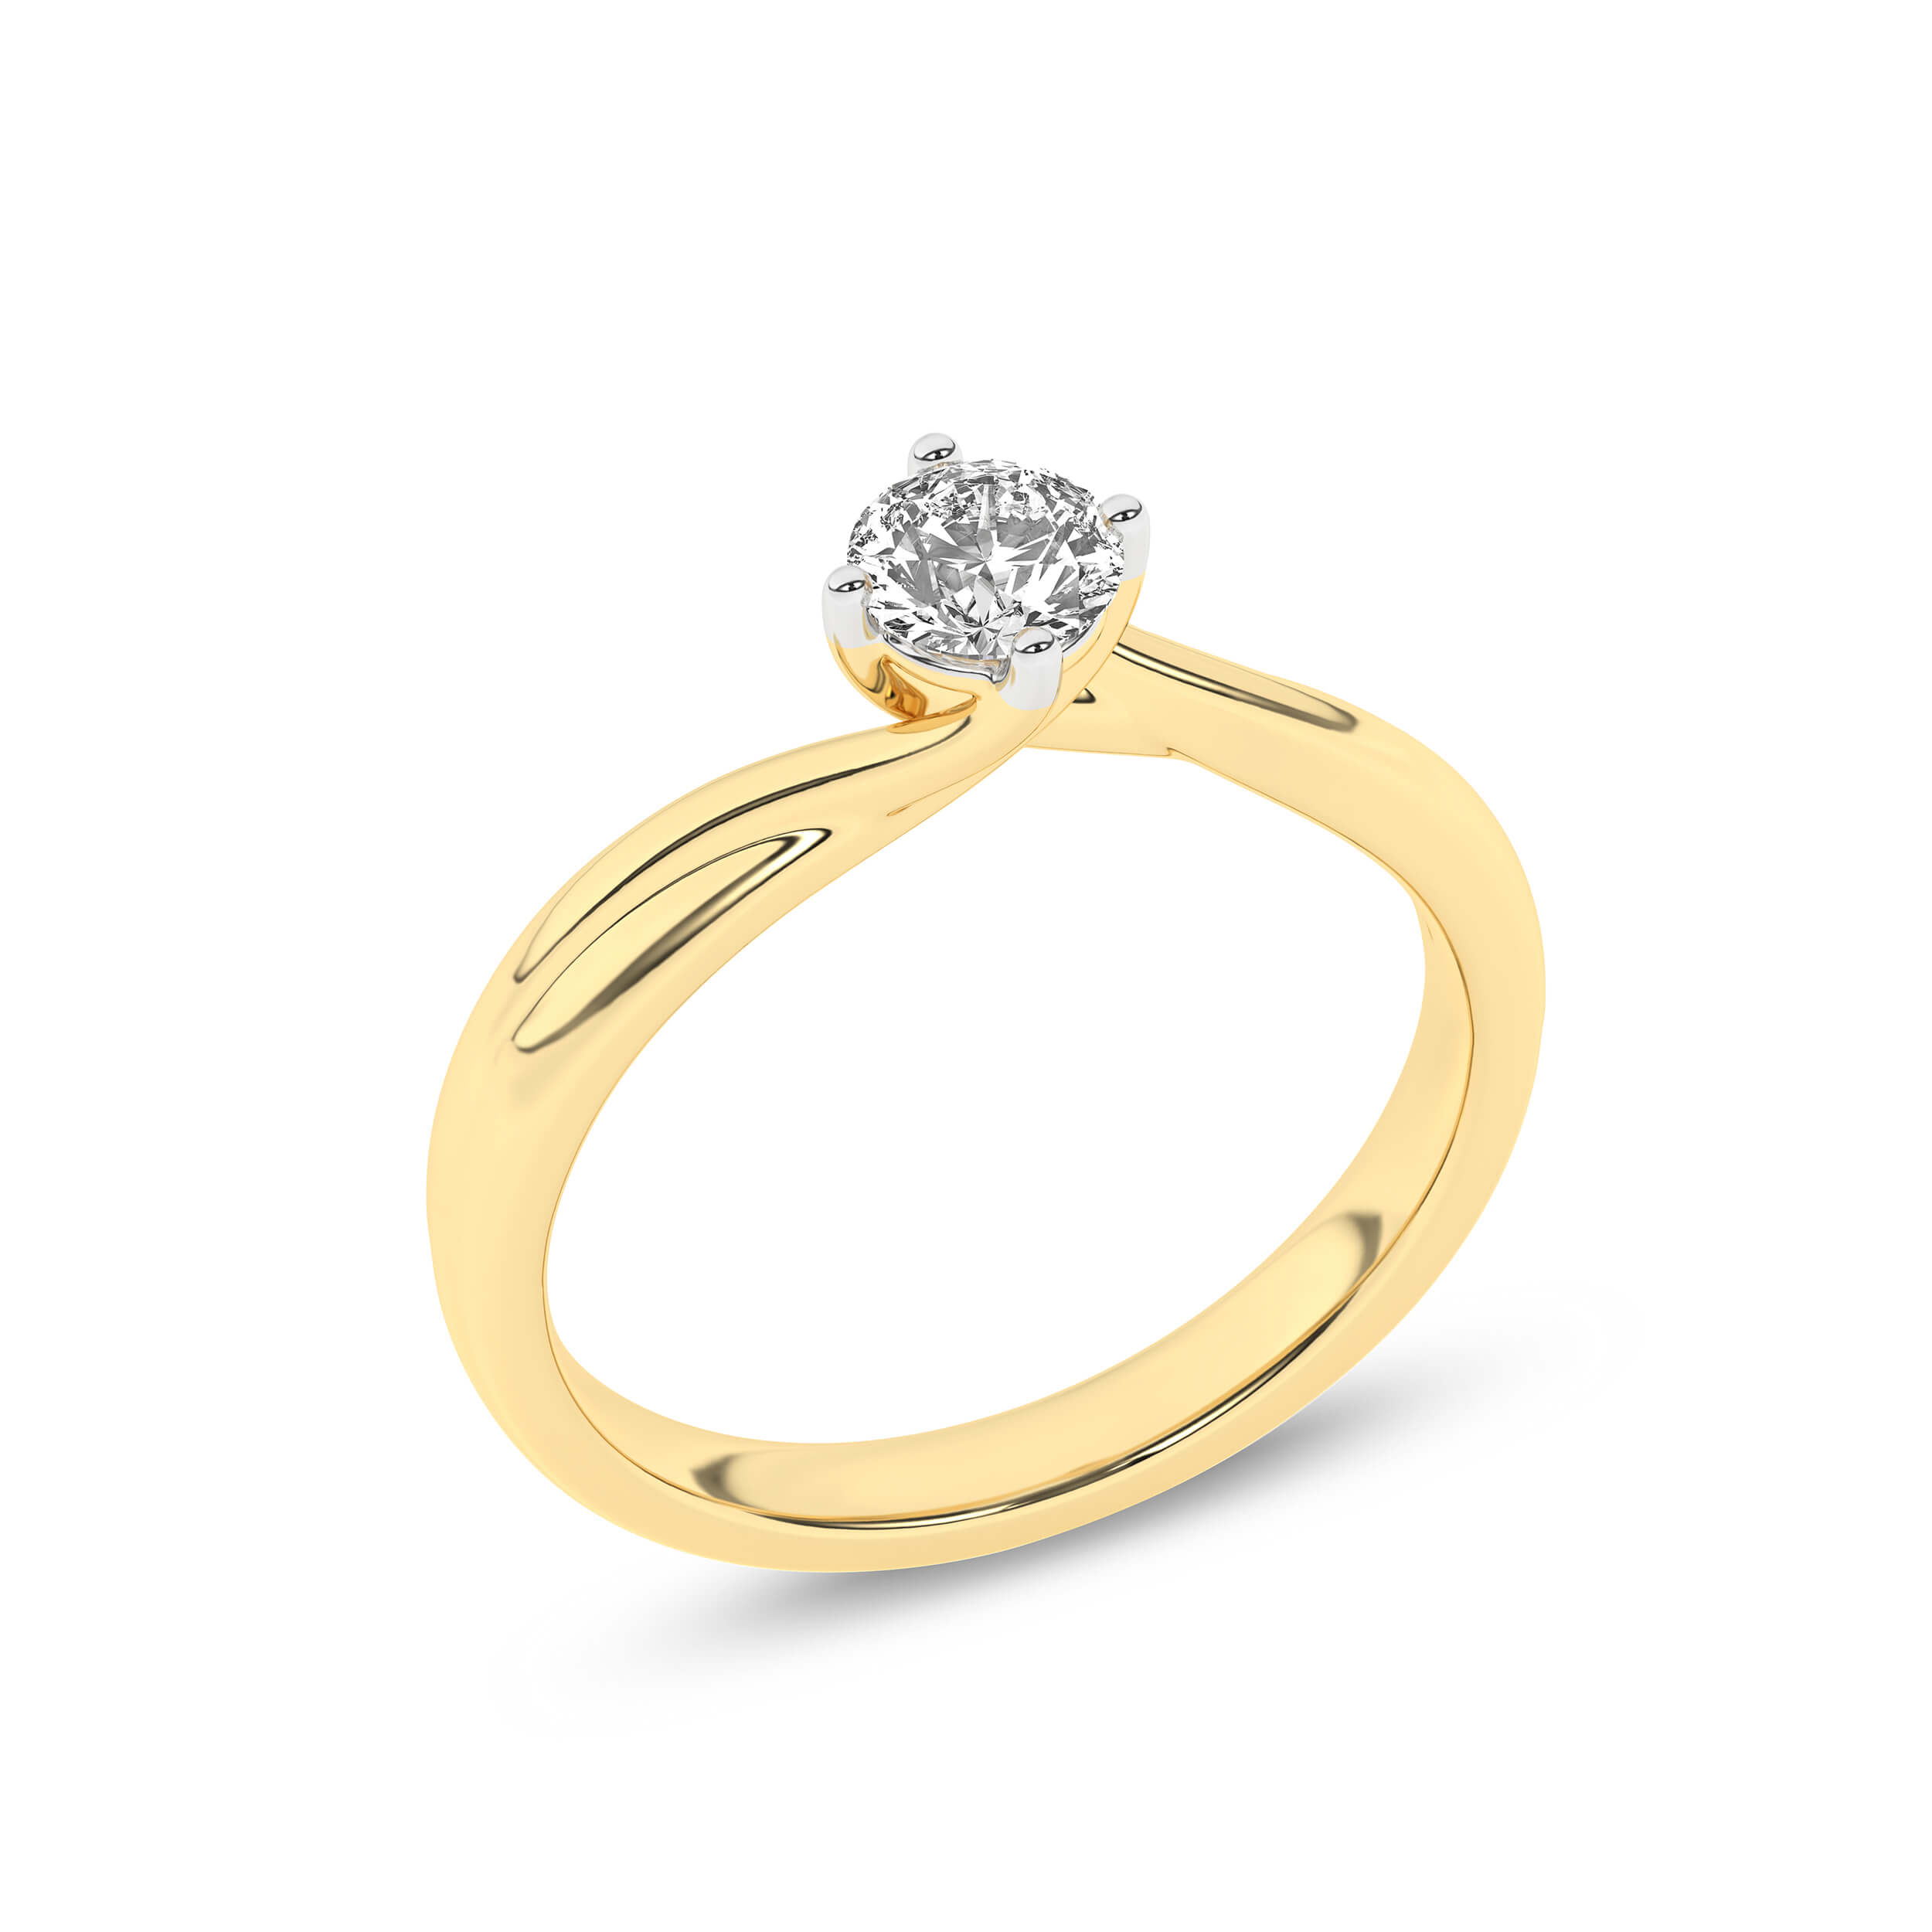 Inel de logodna din Aur Galben 14K cu Diamant 0.33Ct, articol MSD0391EG, previzualizare foto 4